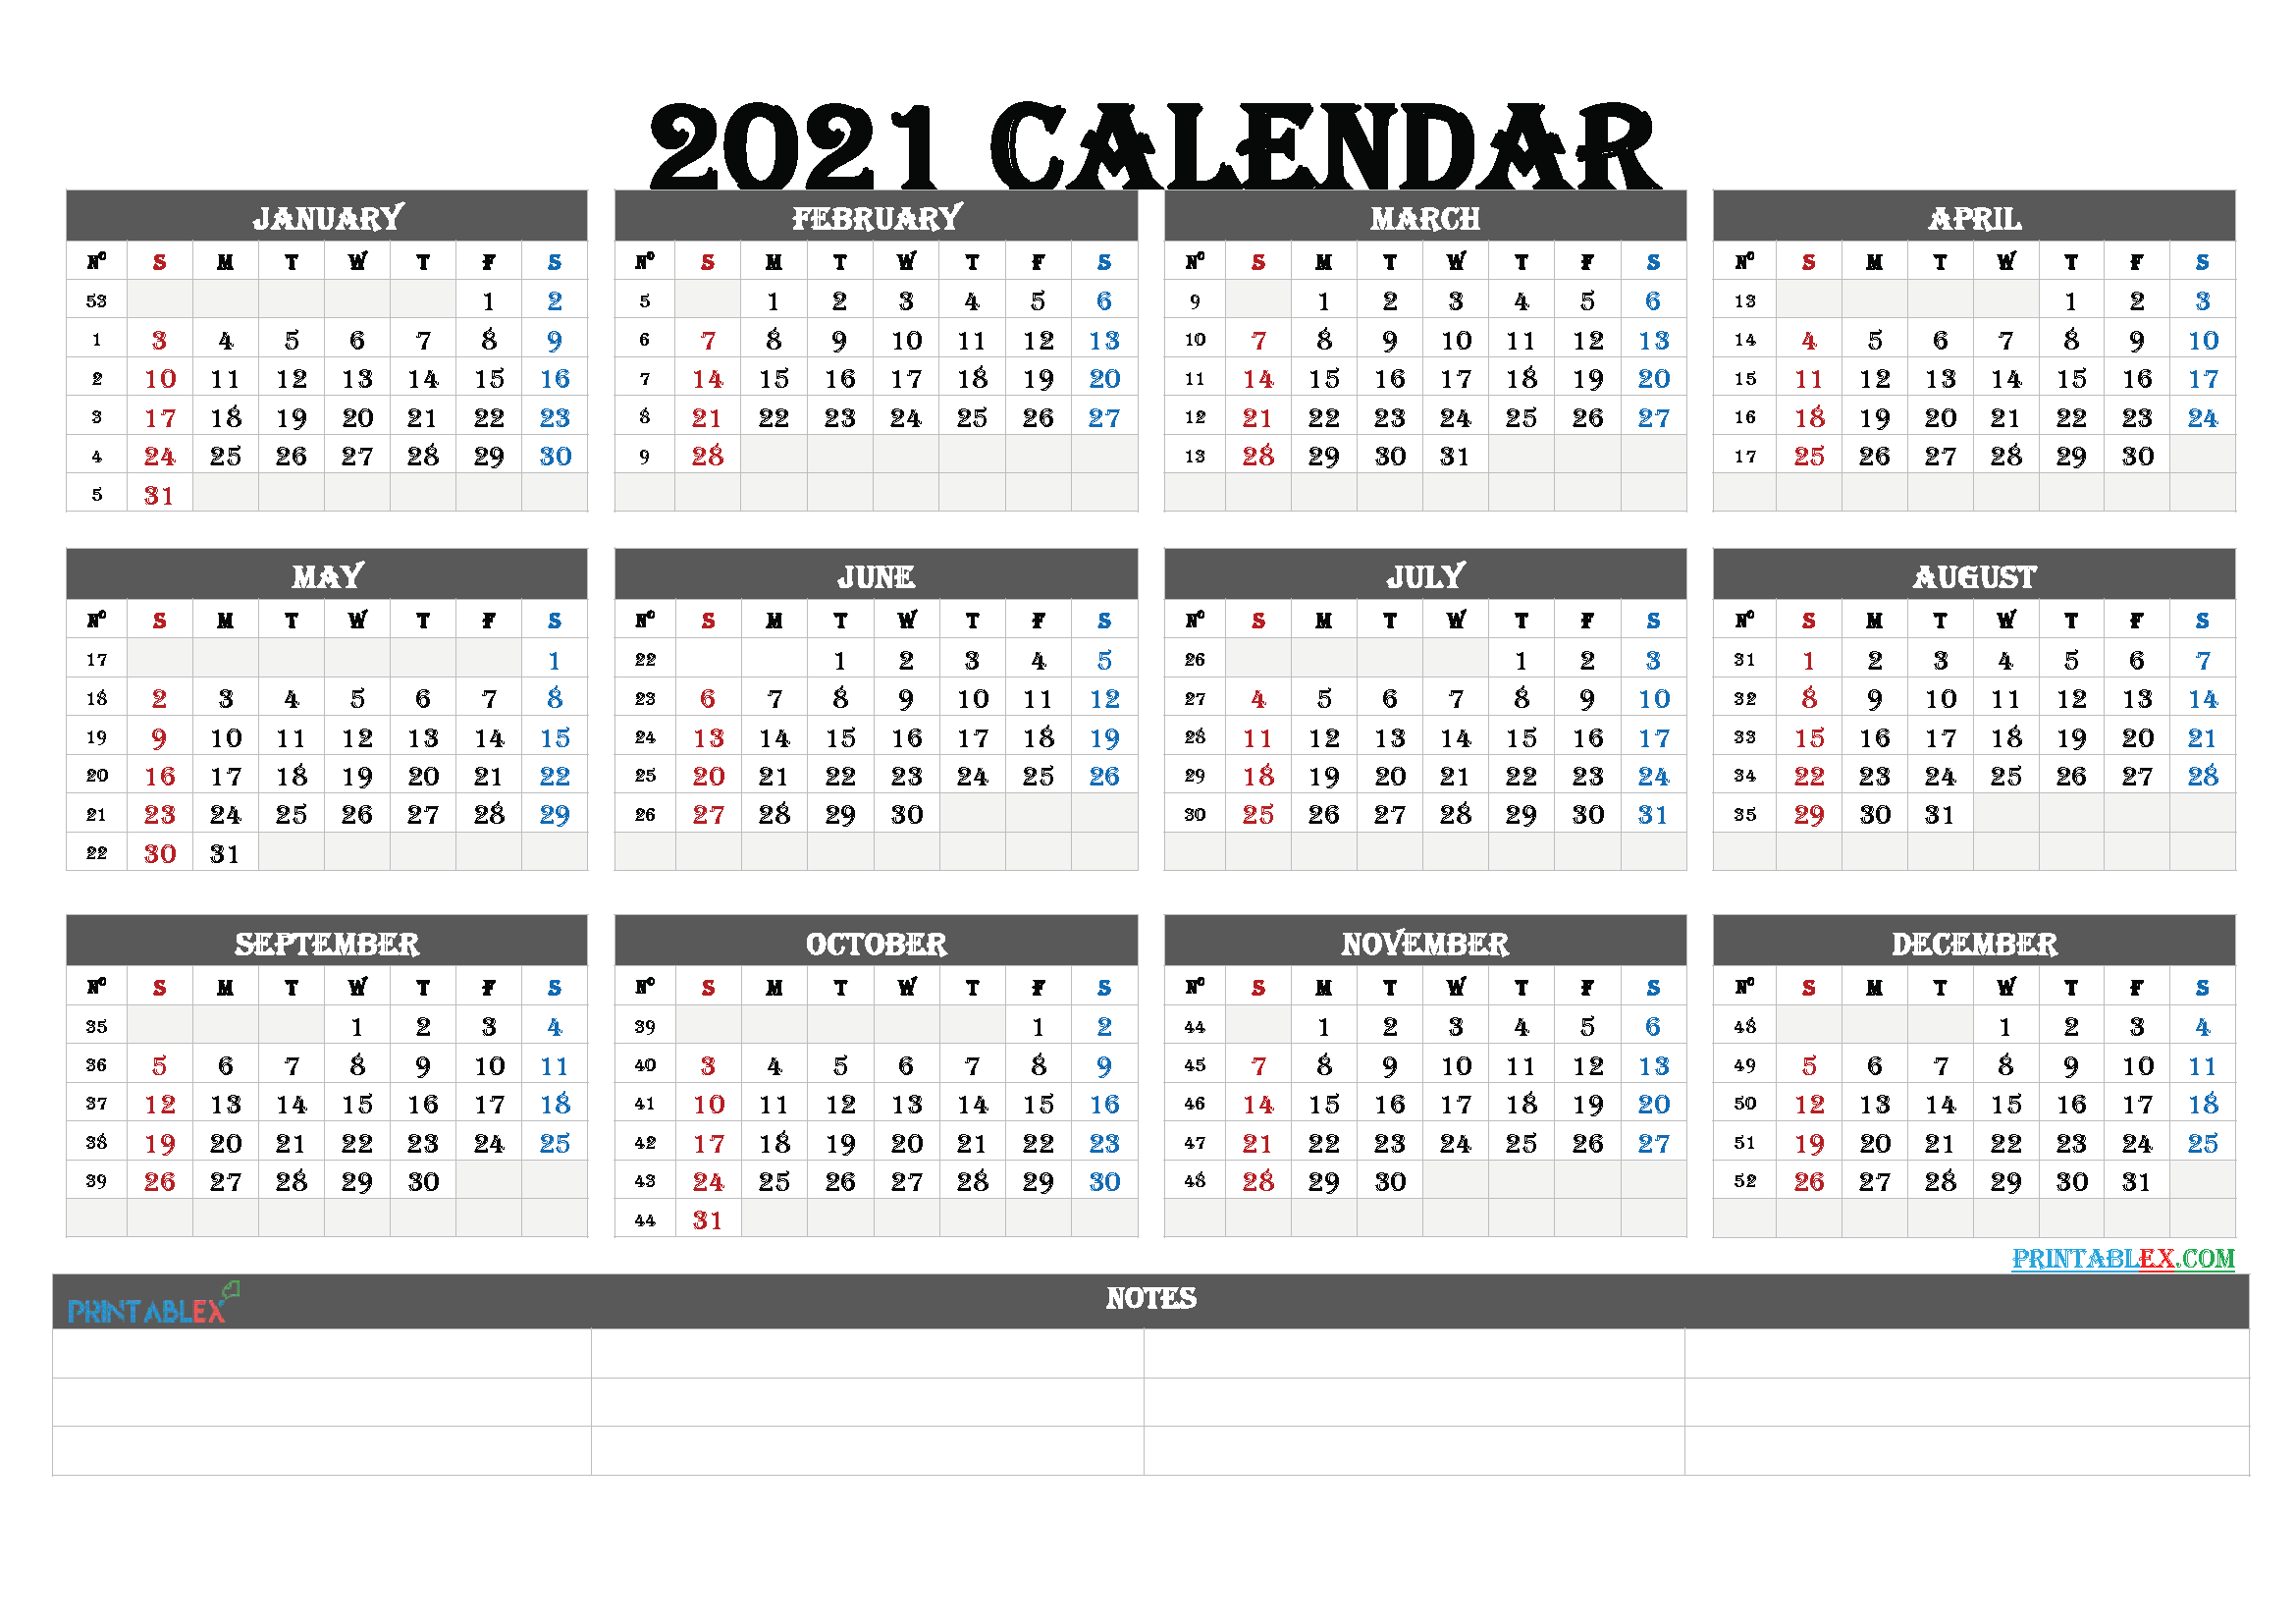 2021 Yearly Calendar Template Word - 21ytw38 - Free ...